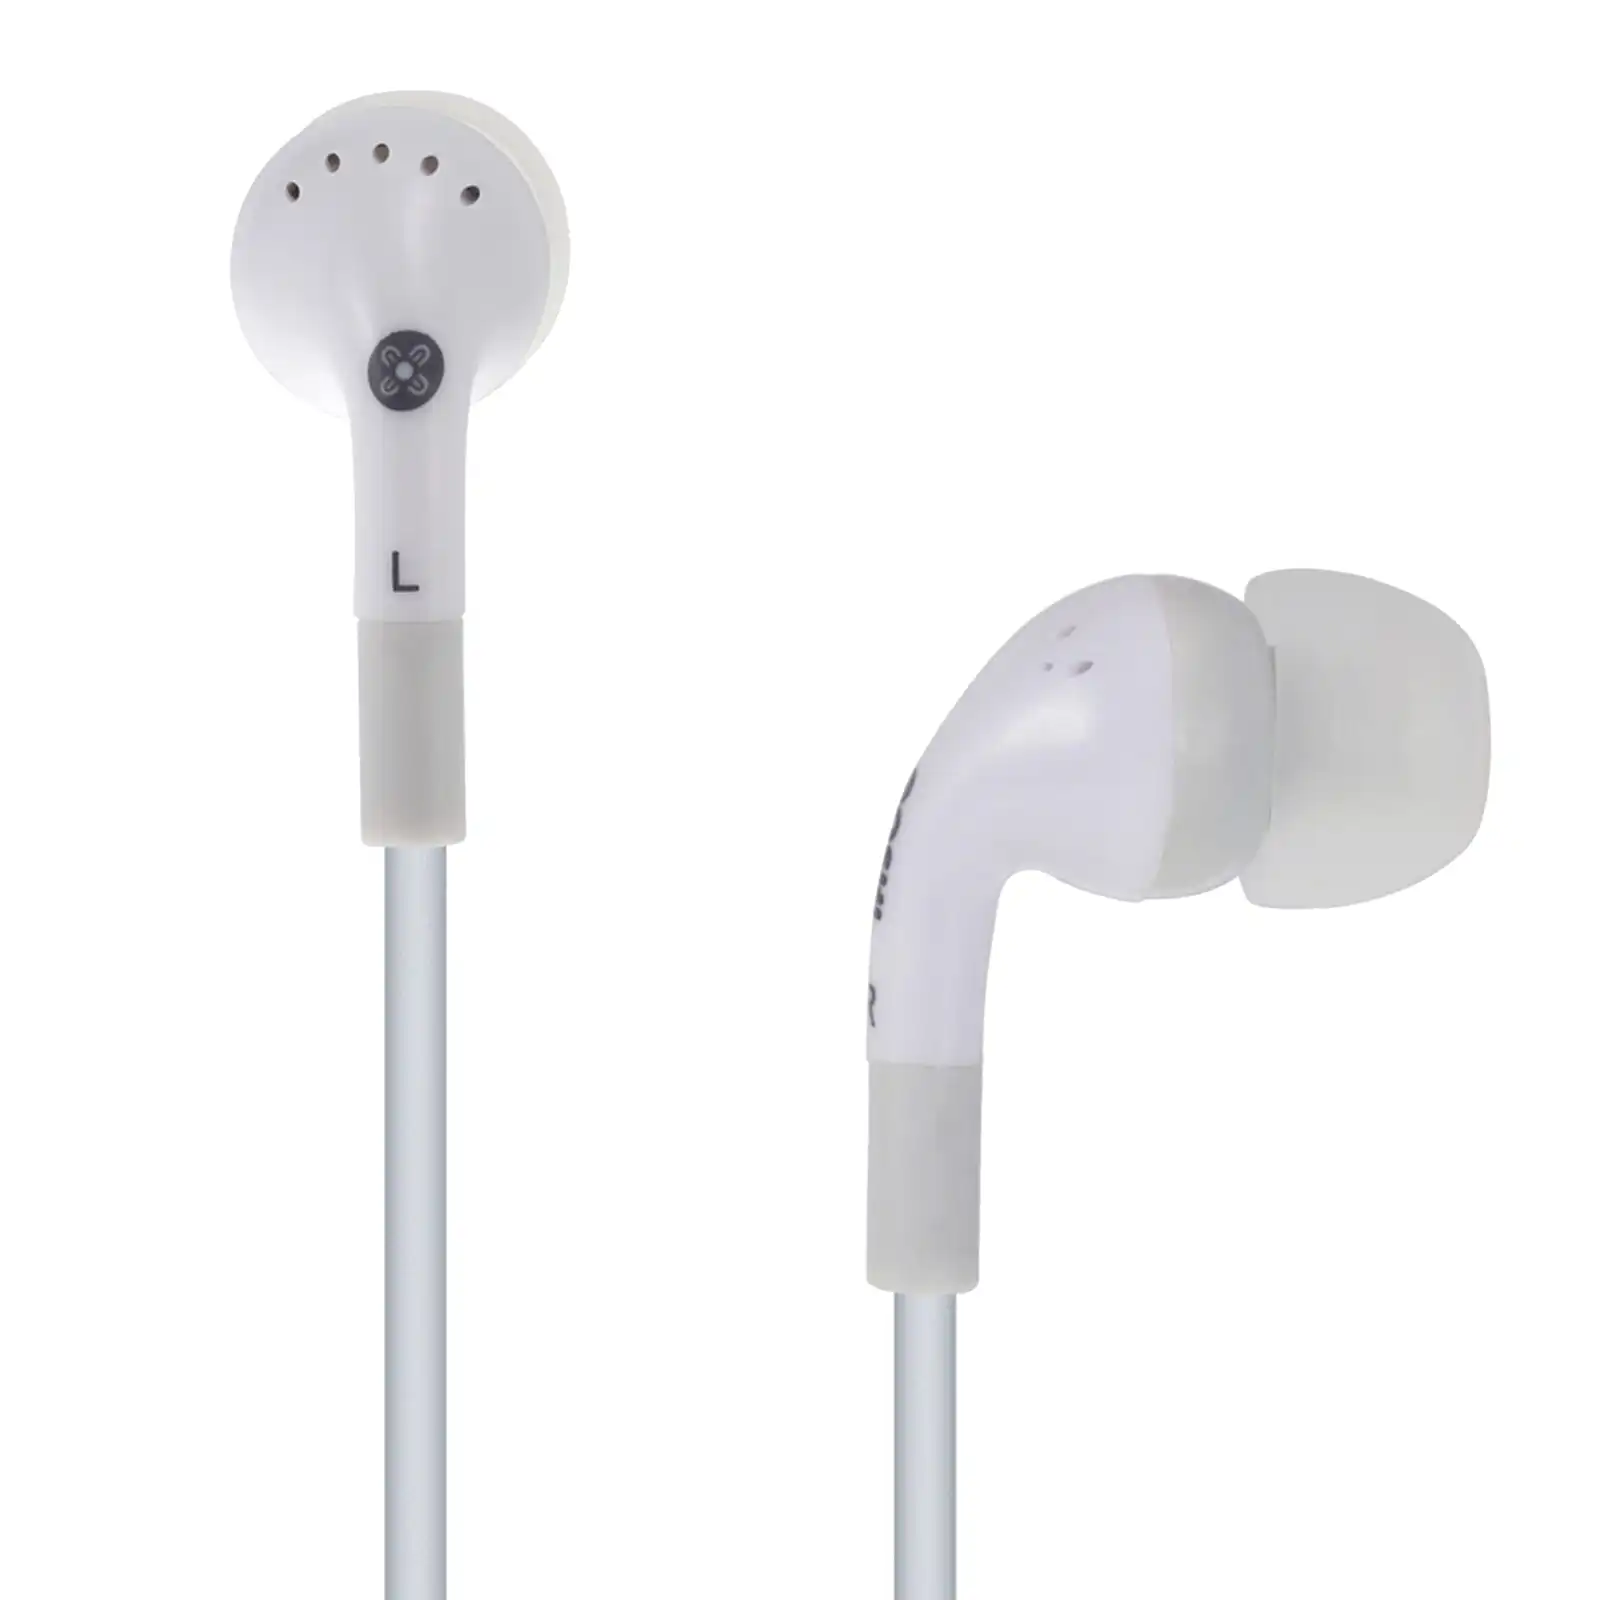 Moki Headphones Noise Isolation Silicone 3.5mm Earphones for iPhone/Android WHT